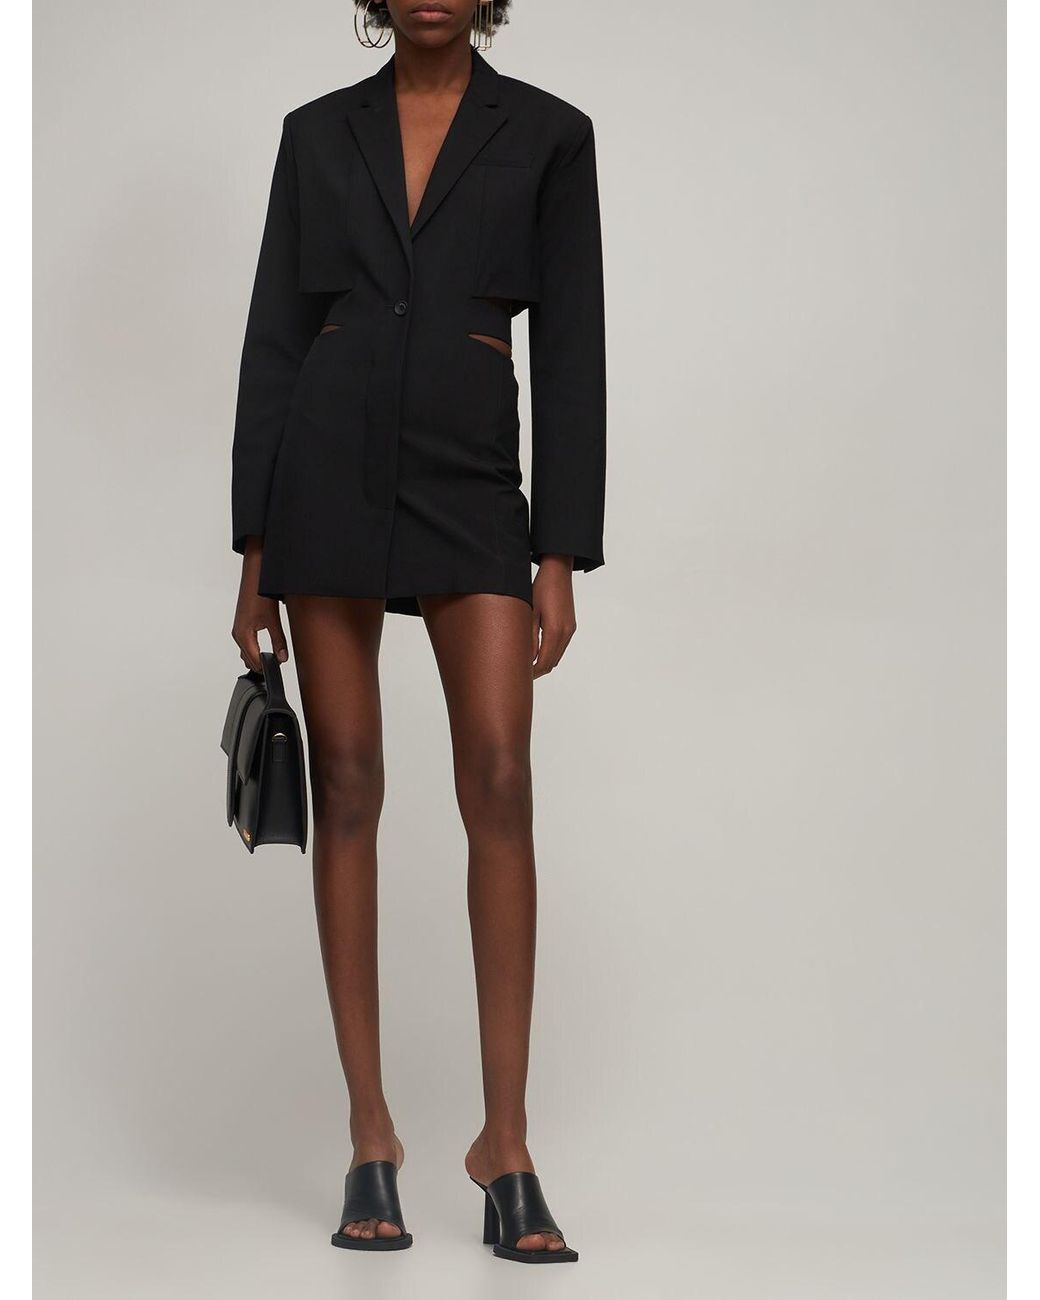 Jacquemus Le Robe Bari Wool Blazer Mini Dress in Black | Lyst